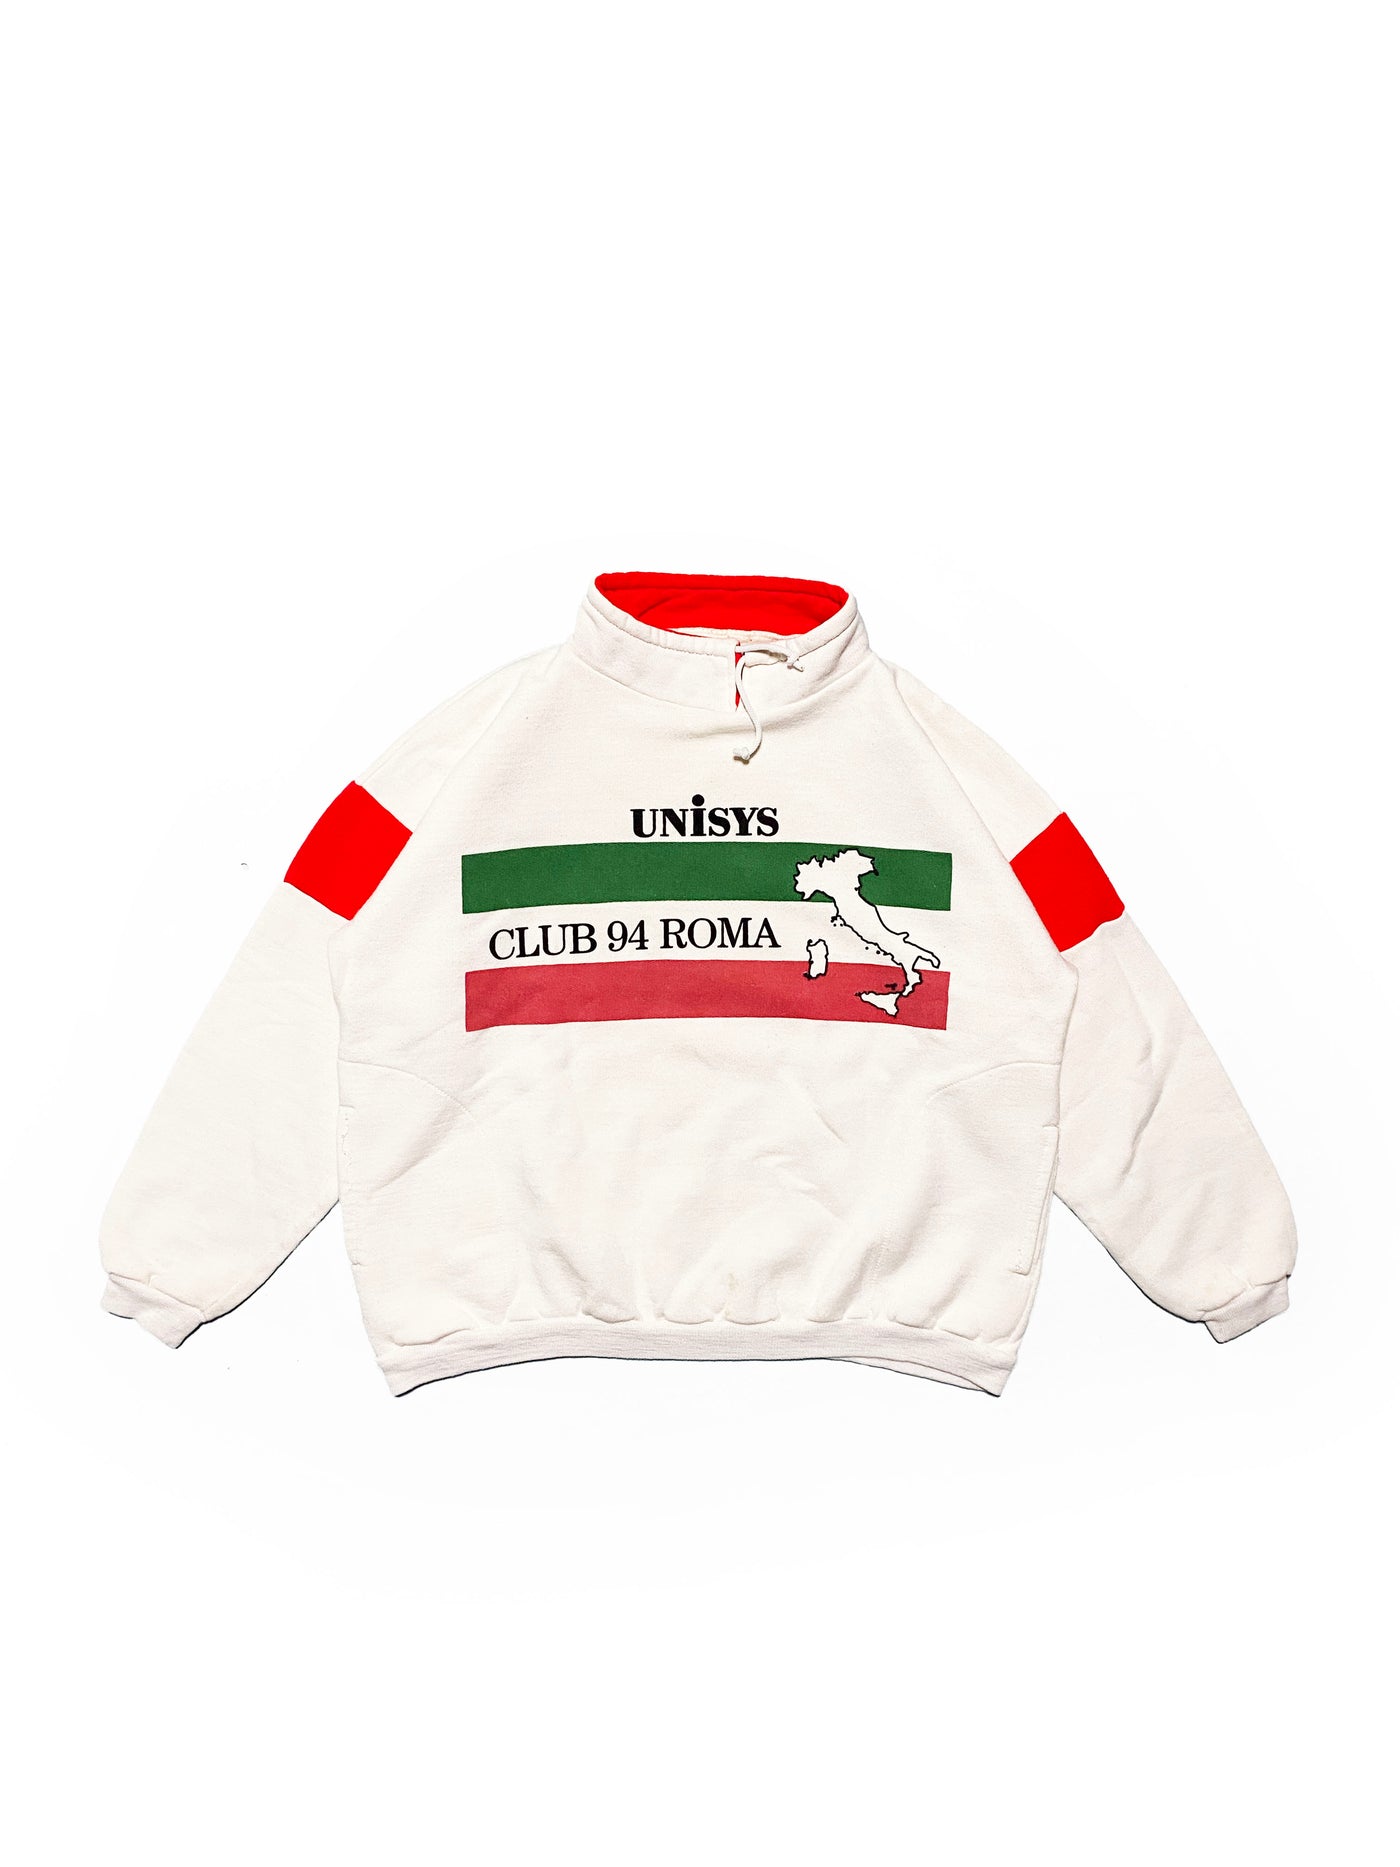 Vintage 1994 Unisys Club Roma, Italy Sweatshirt